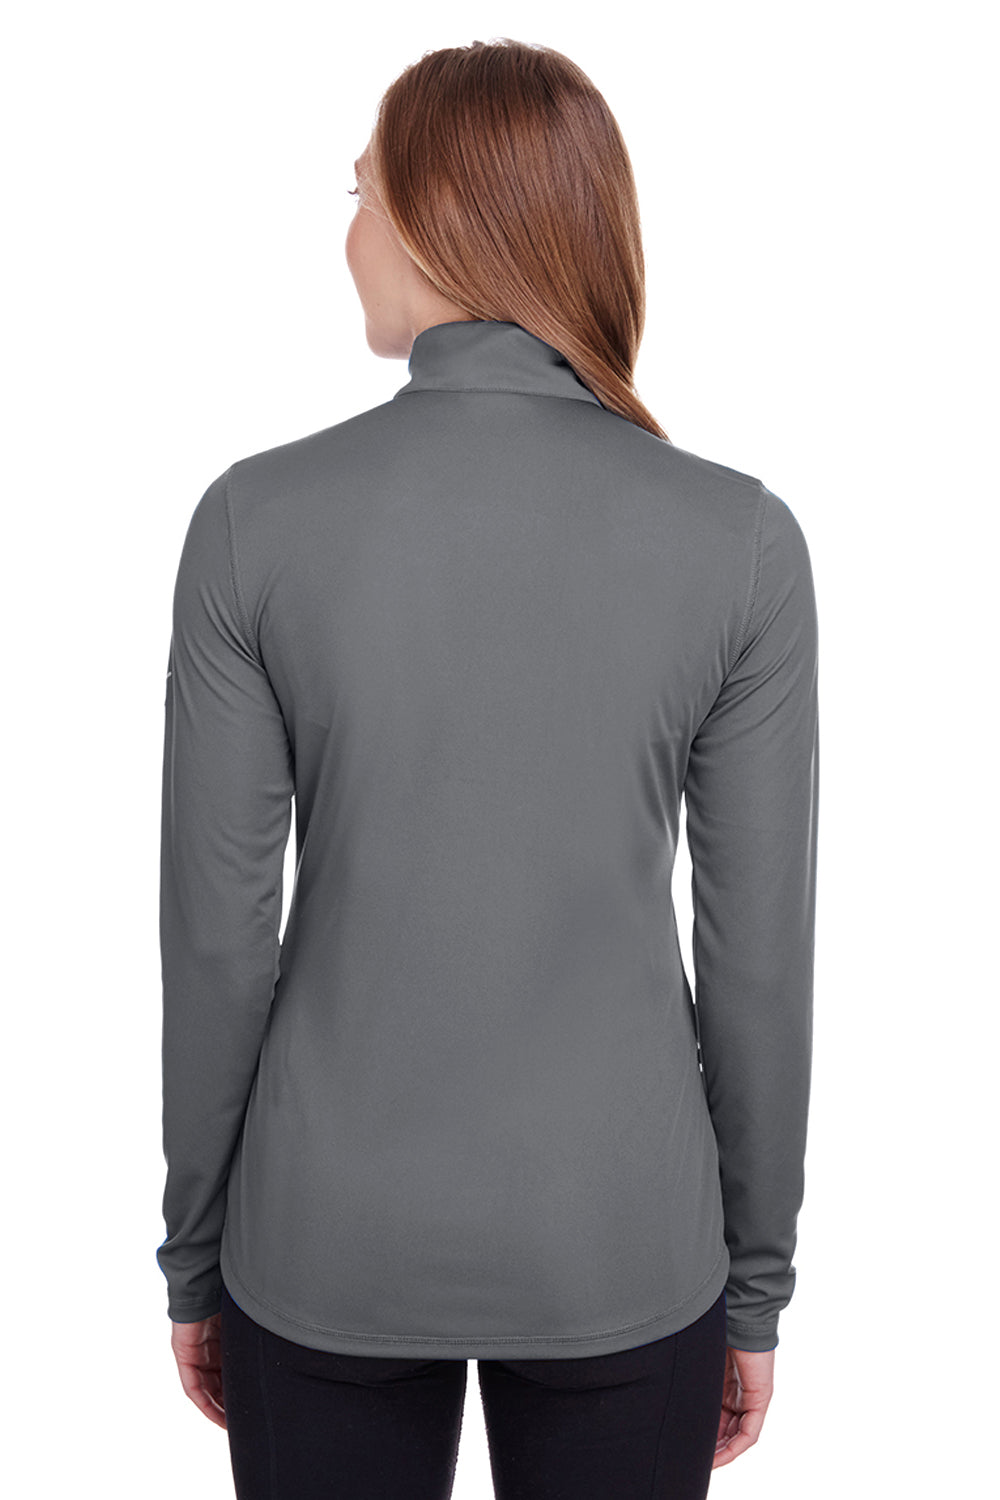 Puma 596803 Womens Icon Performance Moisture Wicking Full Zip Sweatshirt Grey Back